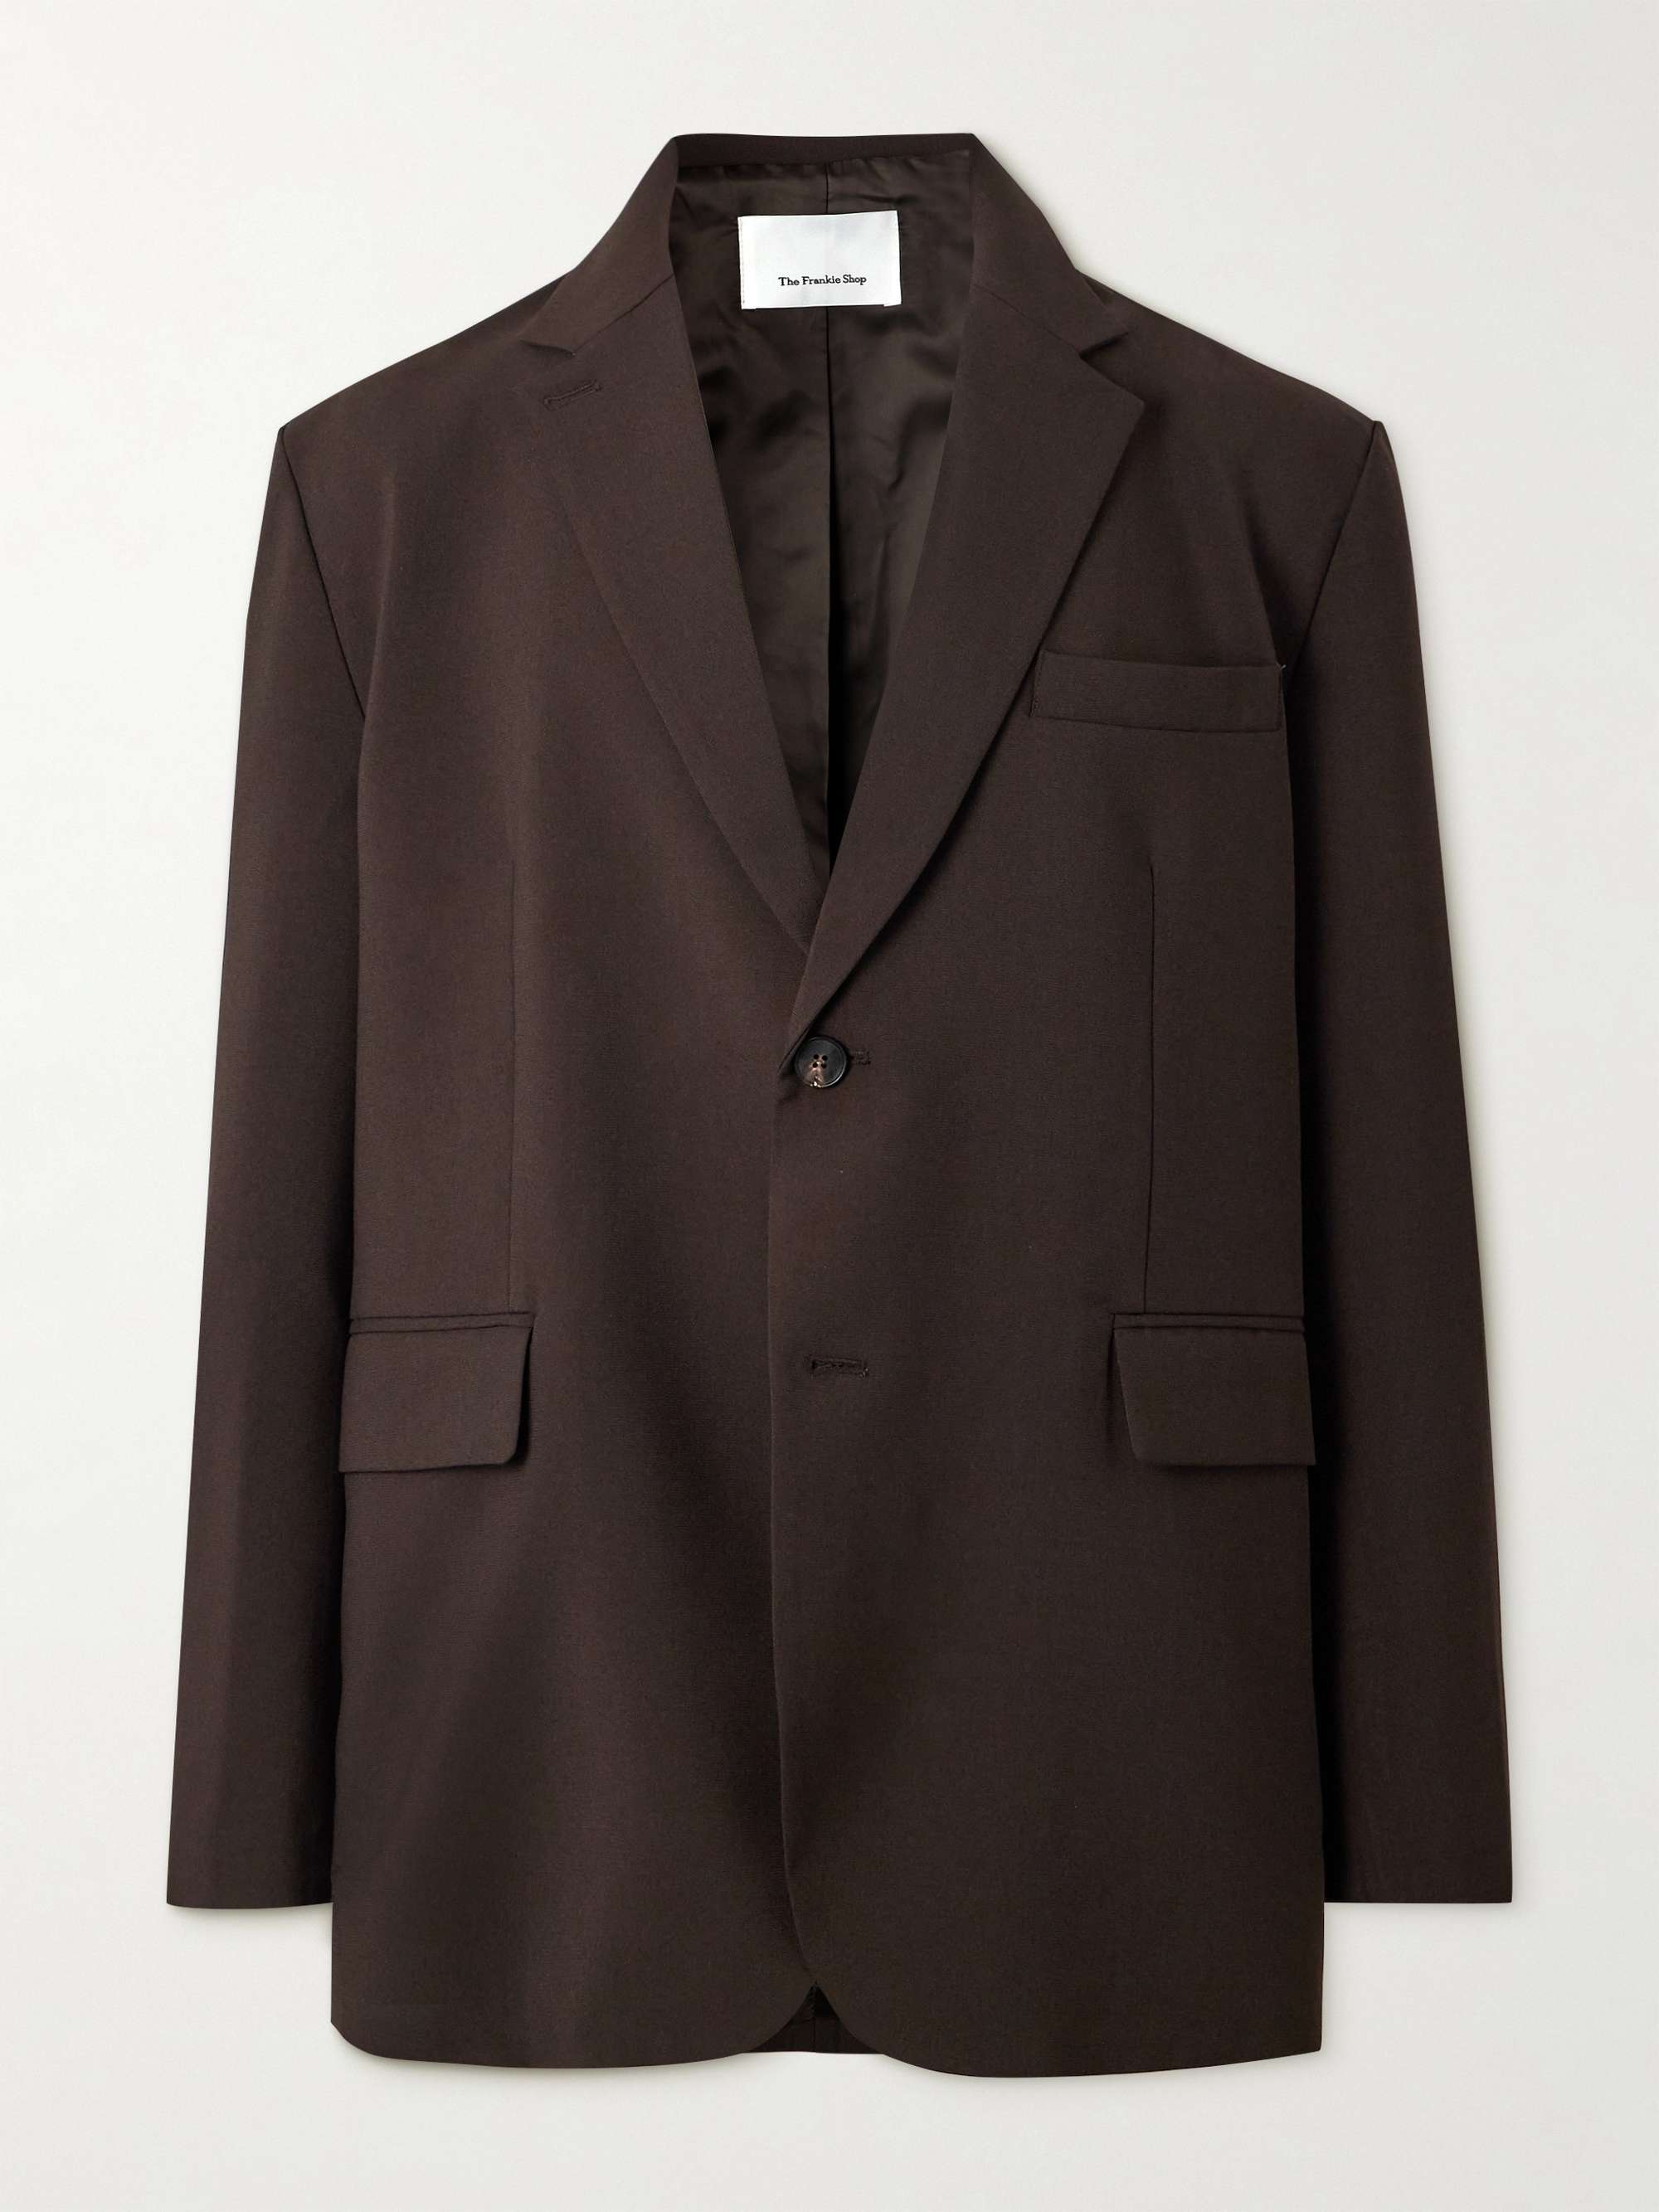 THE FRANKIE SHOP Beo Oversized Woven Suit Jacket for Men | MR PORTER